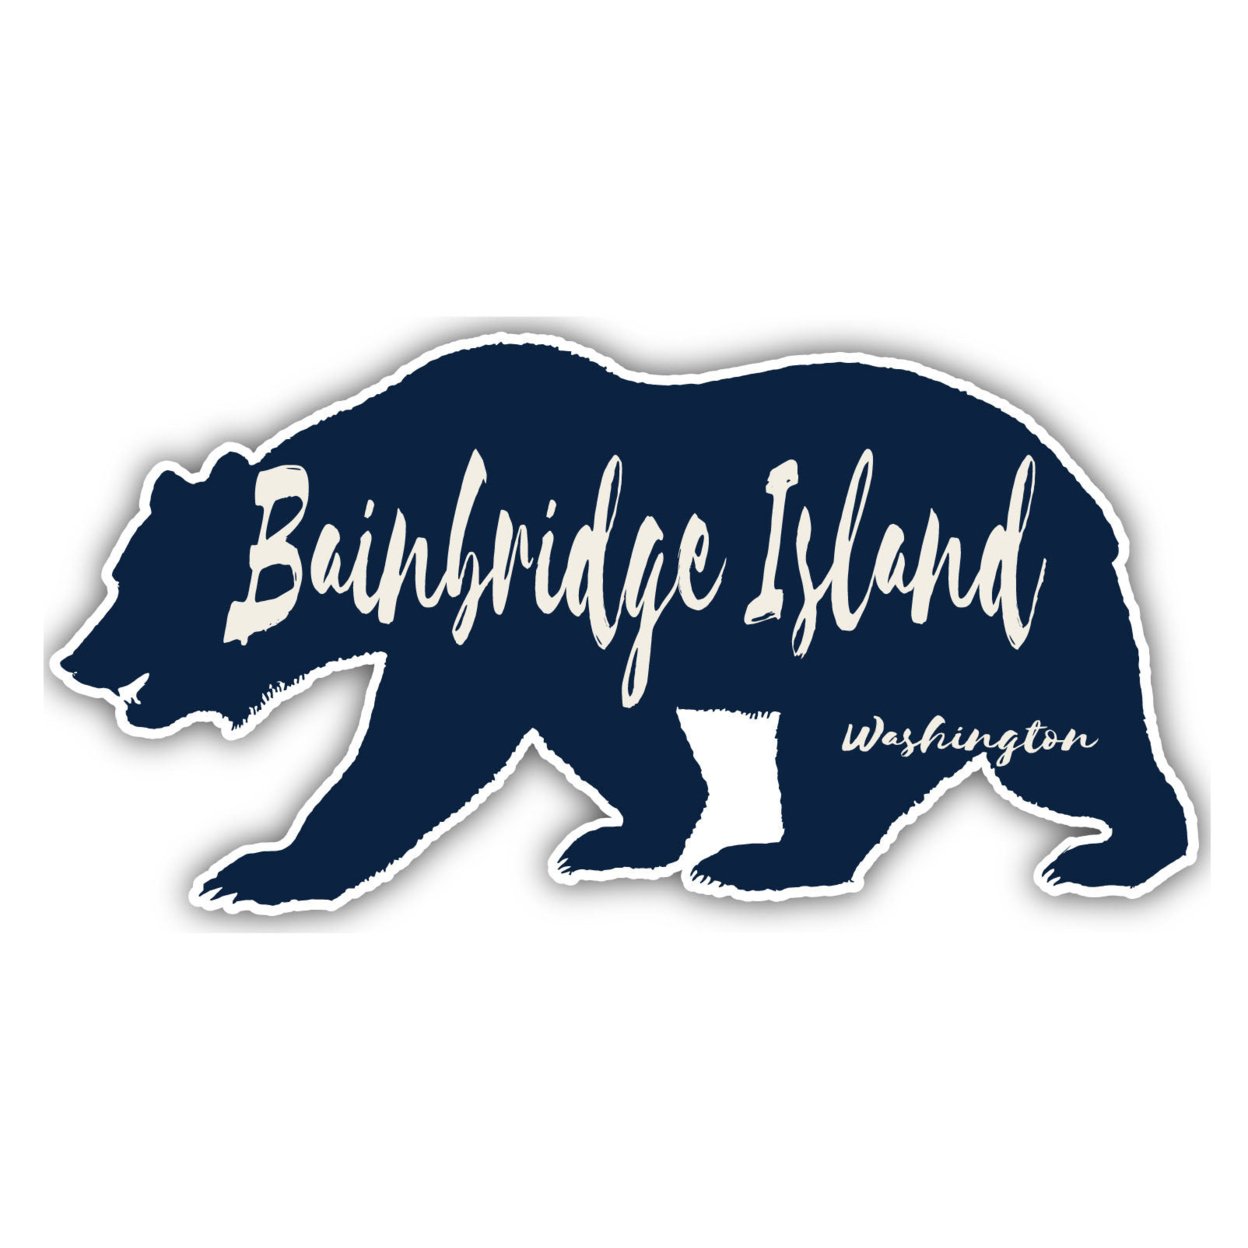 Bainbridge Island Washington Souvenir Decorative Stickers (Choose Theme And Size) - 4-Pack, 6-Inch, Bear